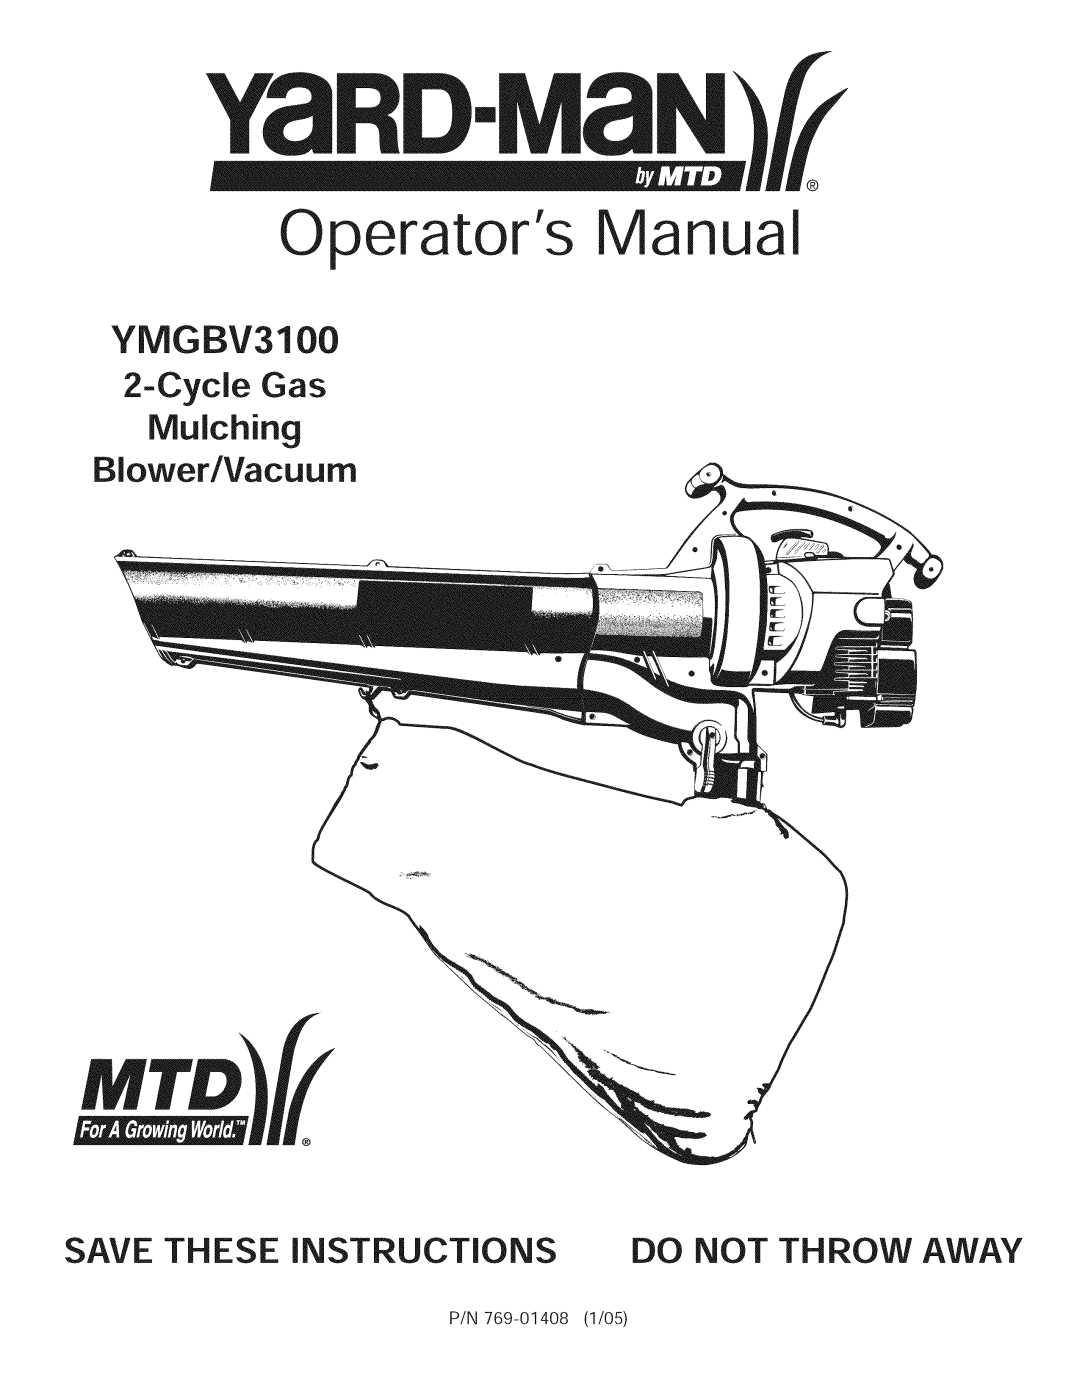 Yard-Man 769.01408 manual YMGBV3100, CycleGas Mulching Blower/Vacuum, Save These Instructions Do Not Throw Away 